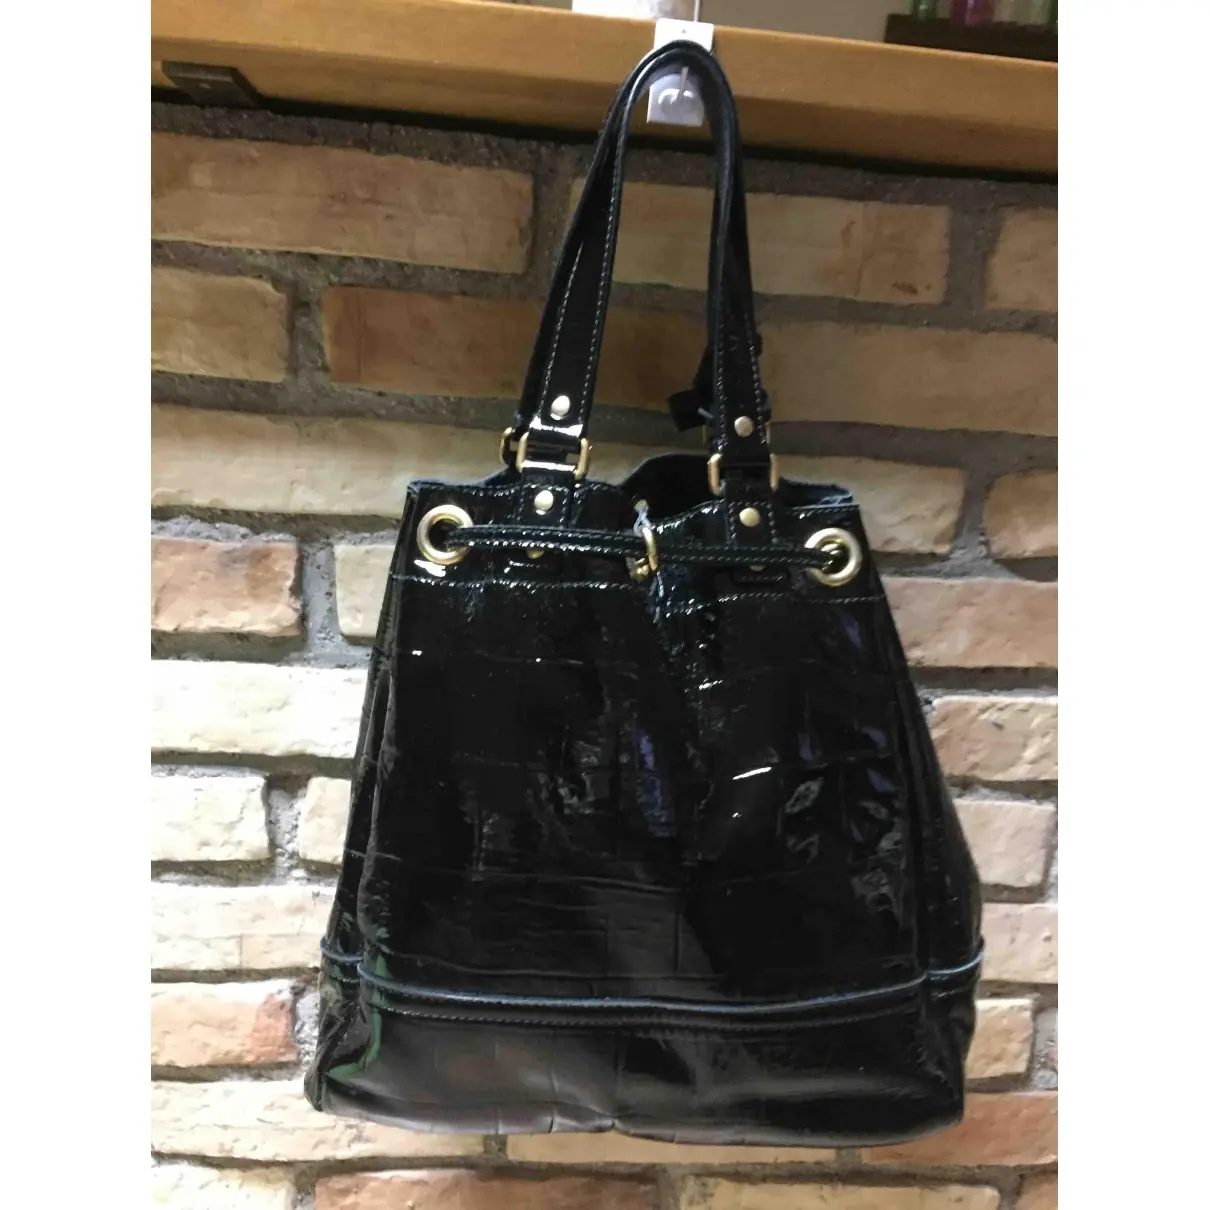 Yves Saint Laurent Patent leather handbag for sale - Vintage